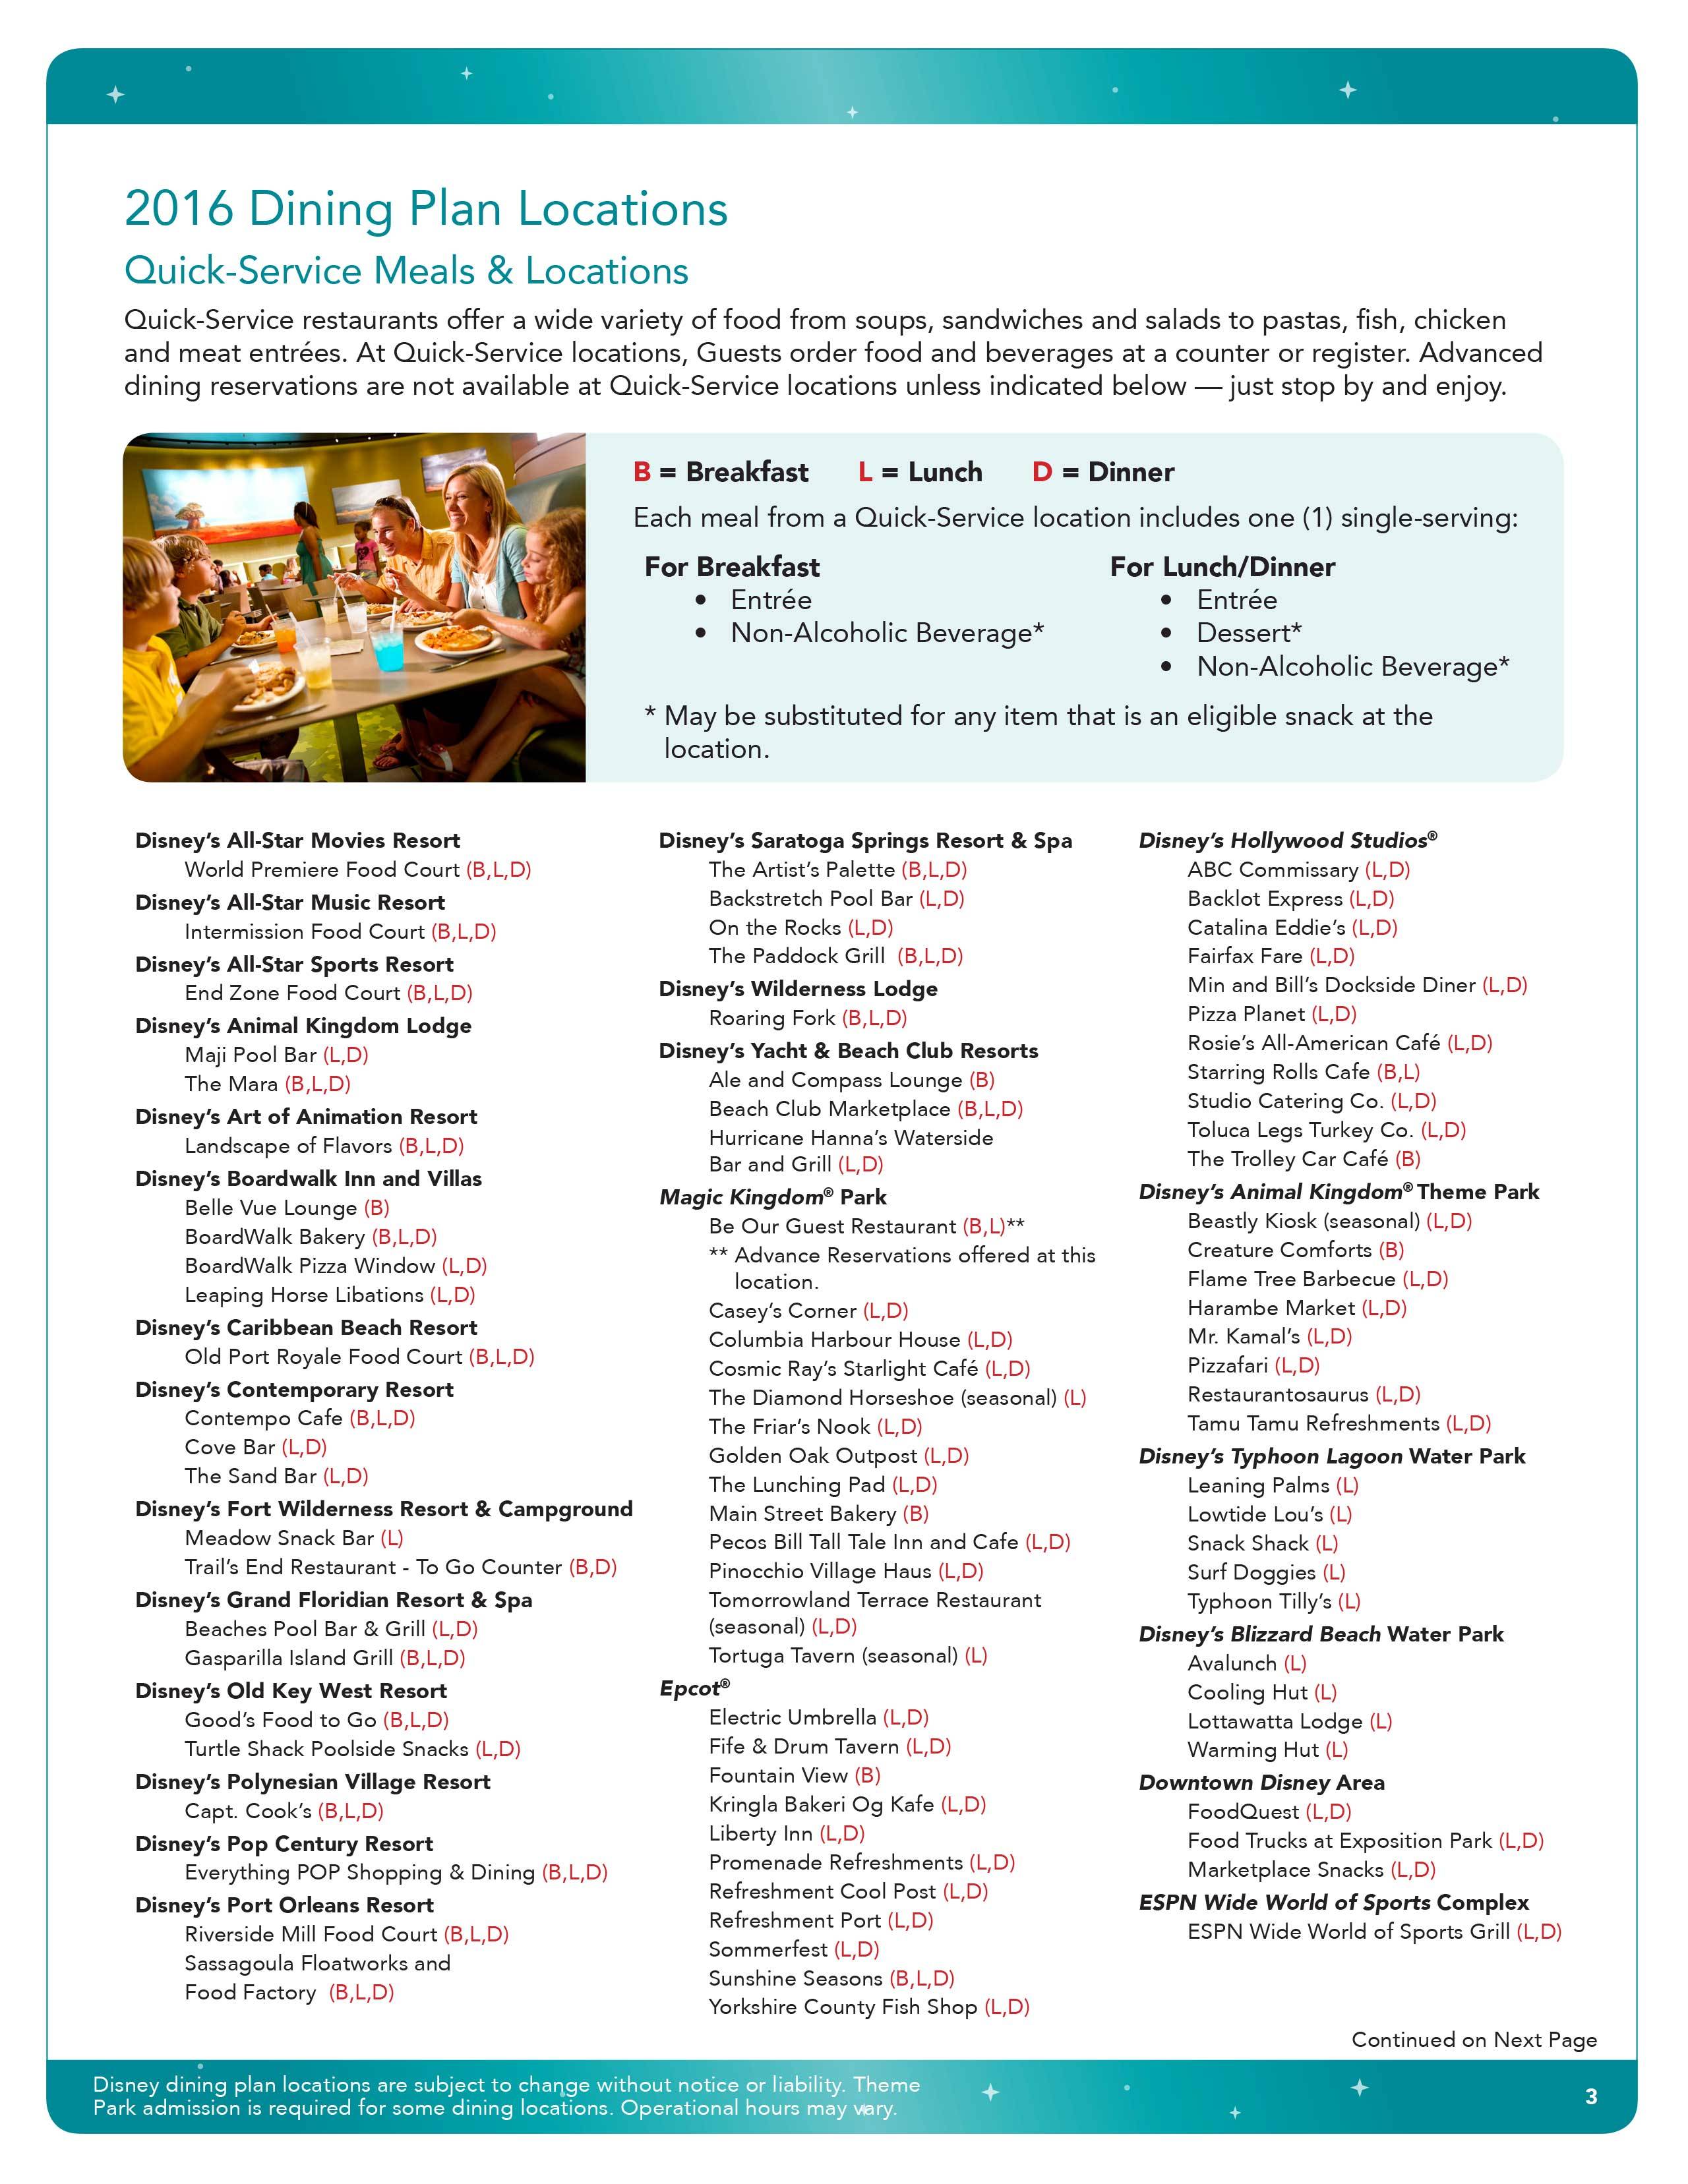 2016 Disney Platinum Dining Plan brochure - Page 8